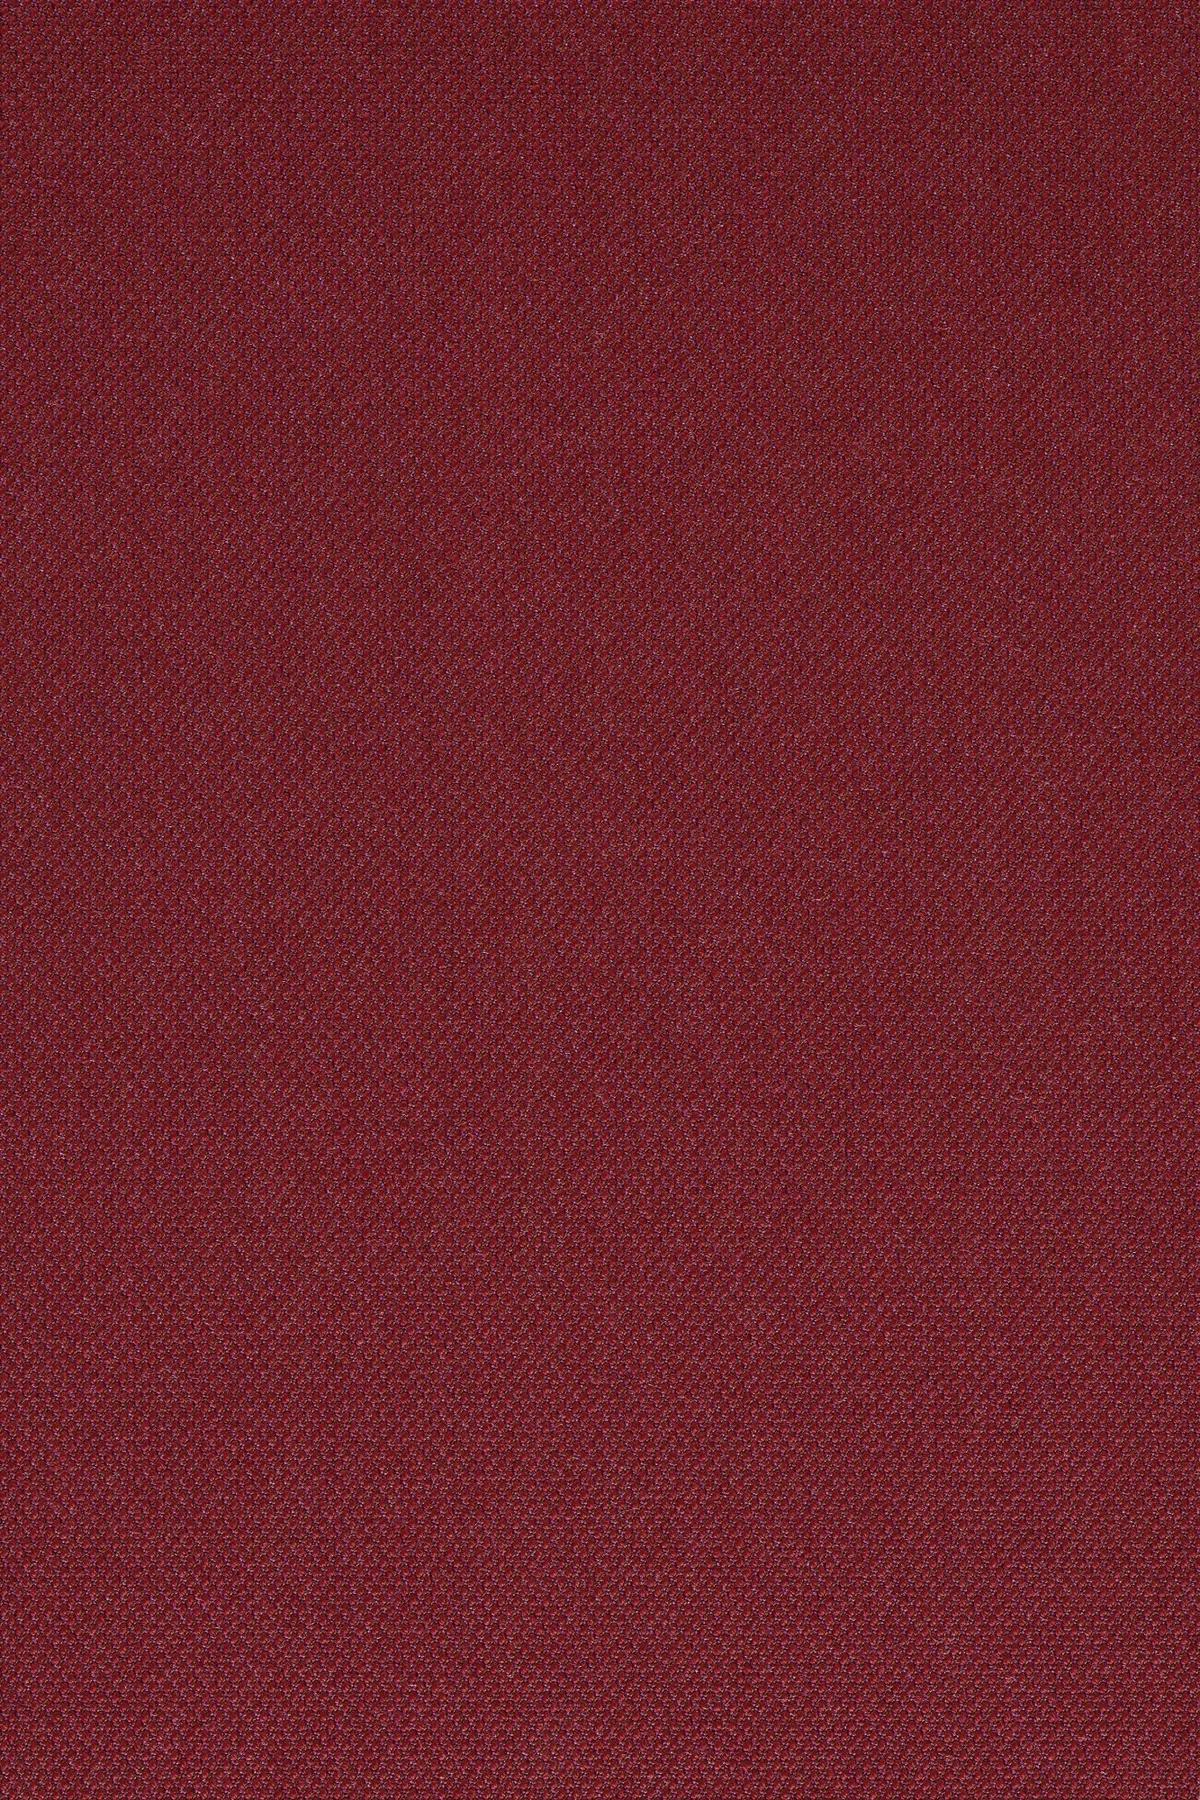 Fabric sample Steelcut Trio 3 686 pink